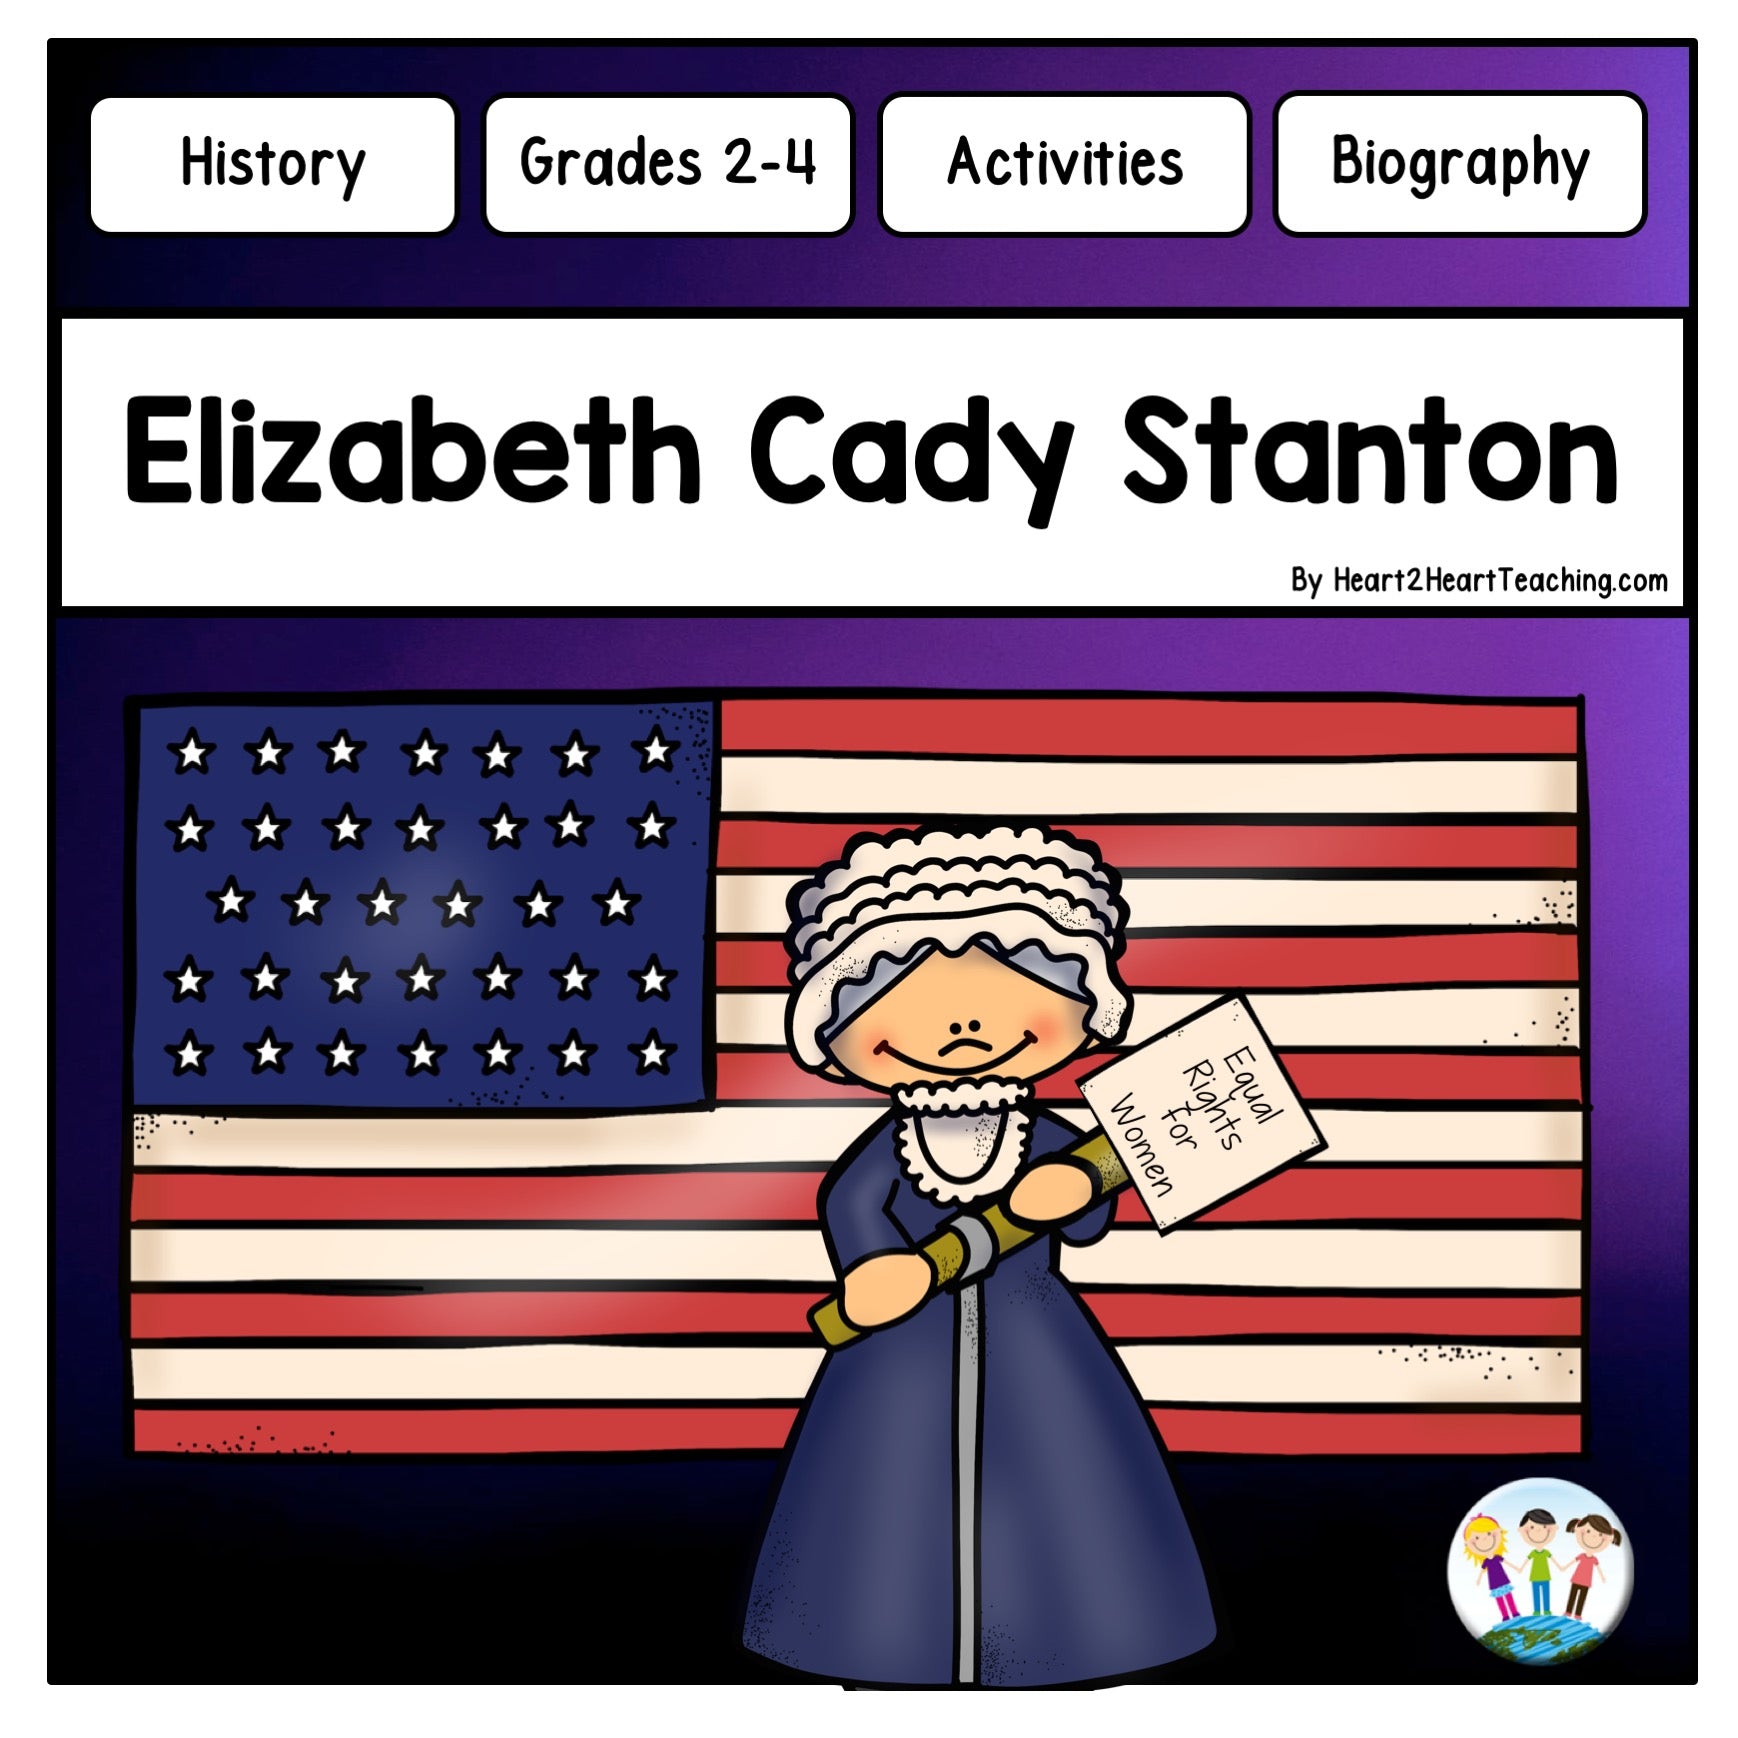 elizabeth cady stanton educational background clipart